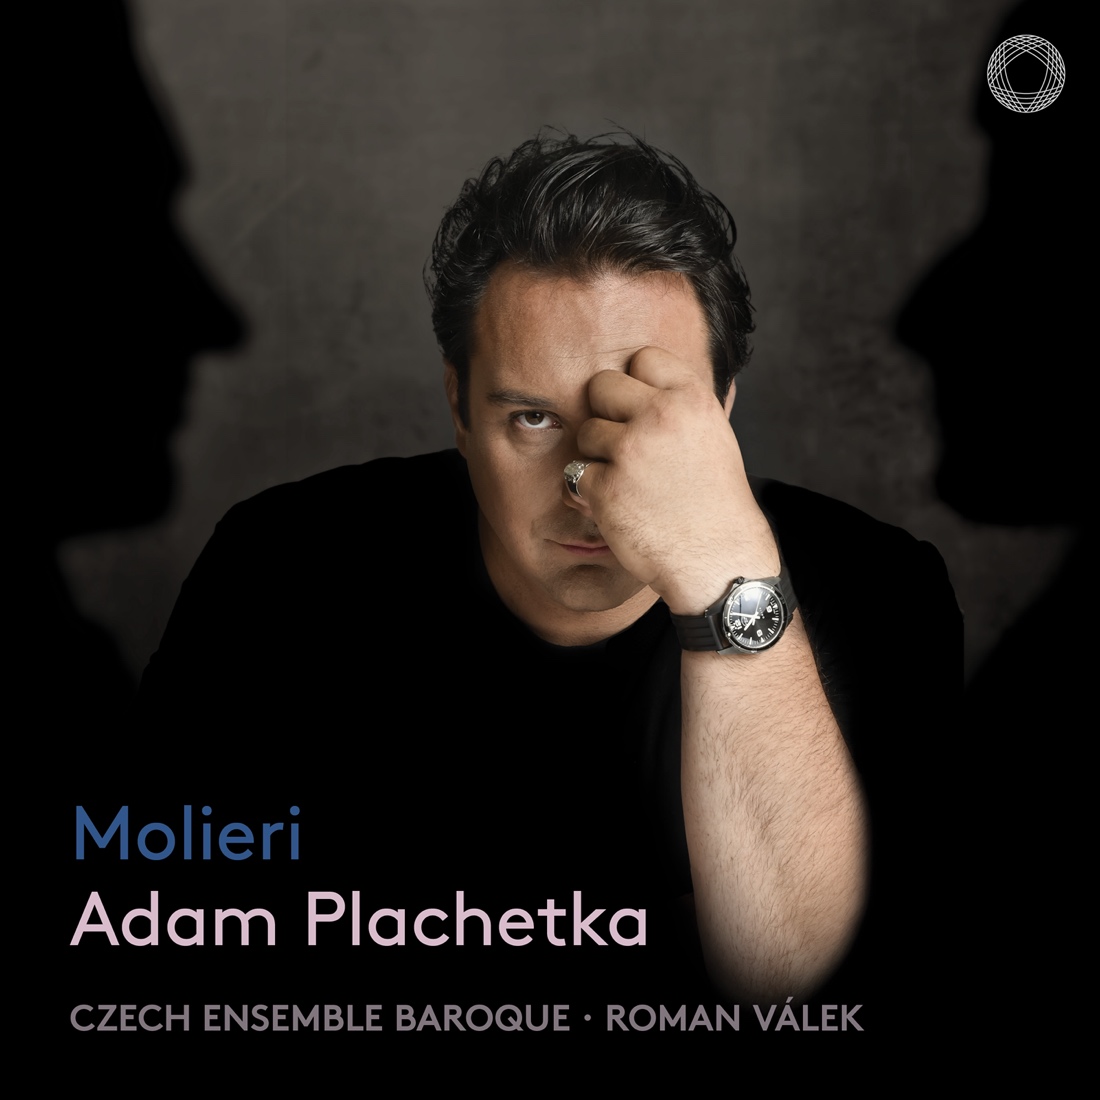 Adam Plachetka, Czech Ensemble, Roman Válek: Molieri (Arias by Mozart and Salieri)